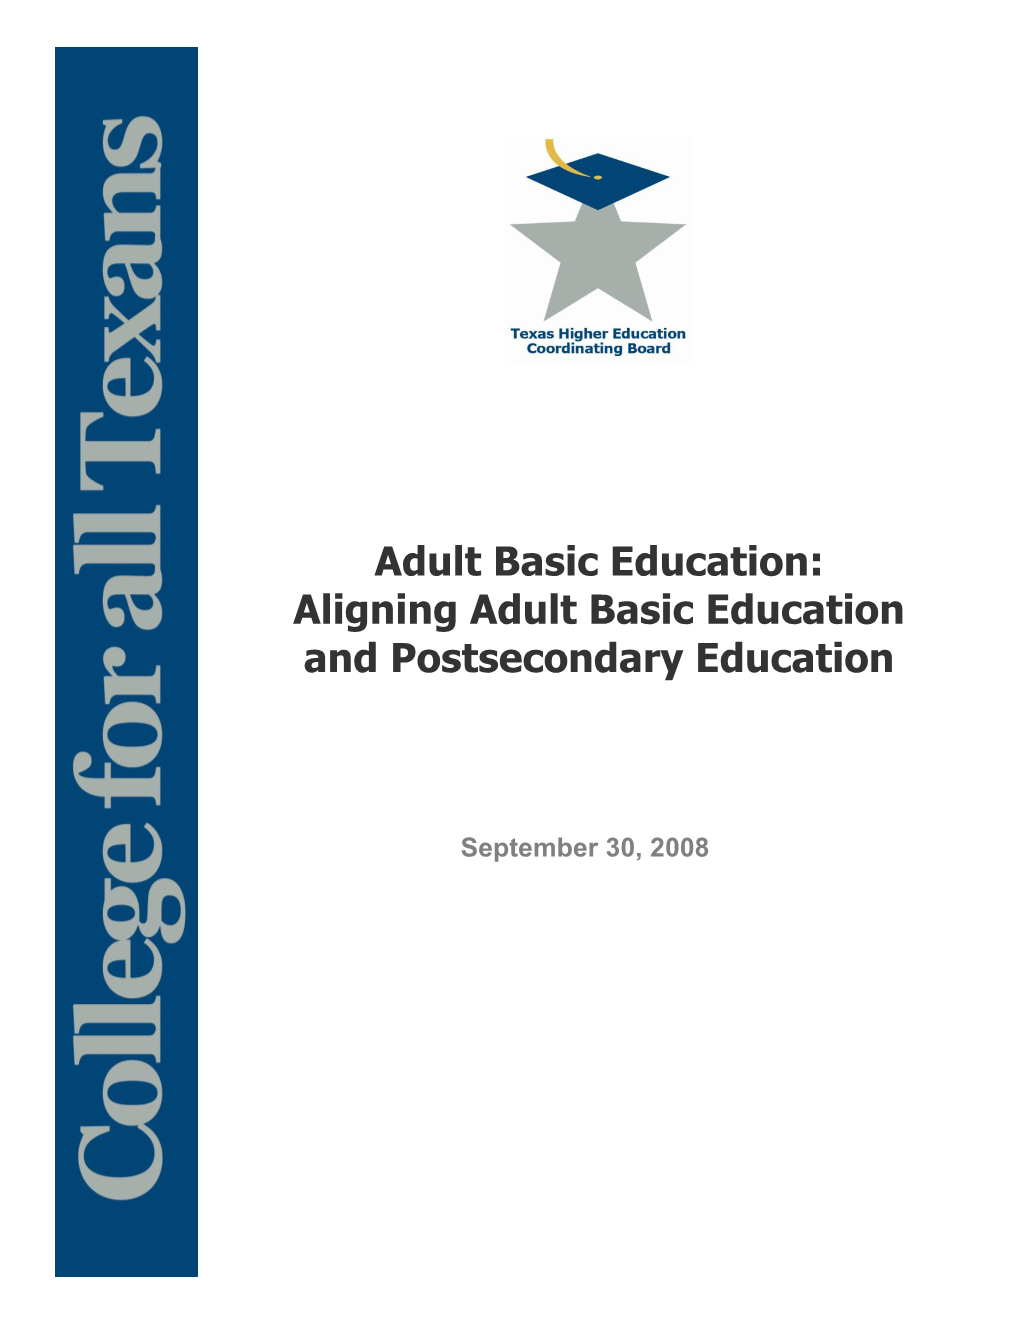 Aligning Adult Basic Education and Postsecondary Education